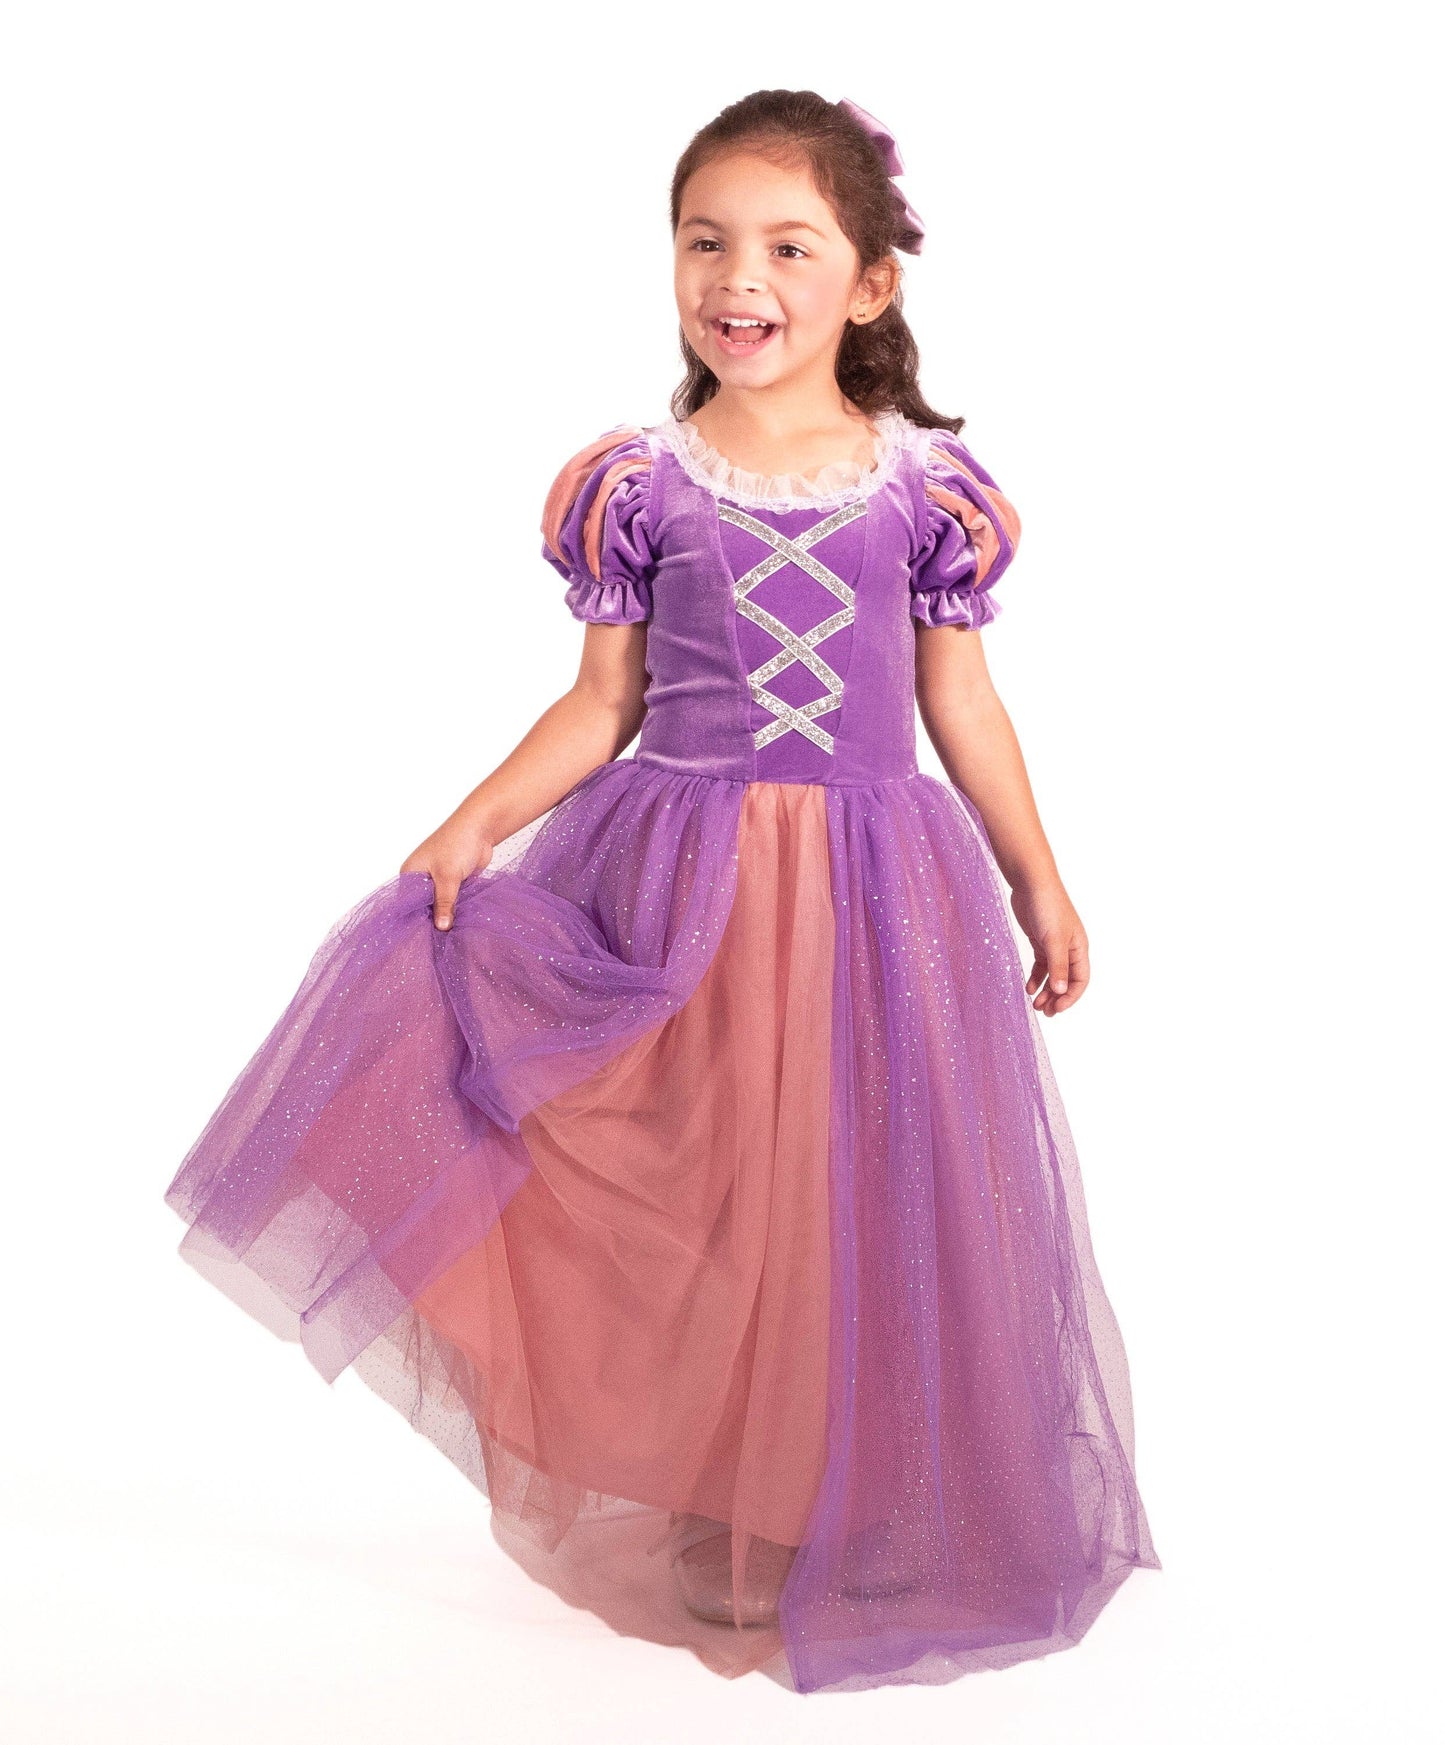 Tower Princess Costume Dress (M)  6-8 years